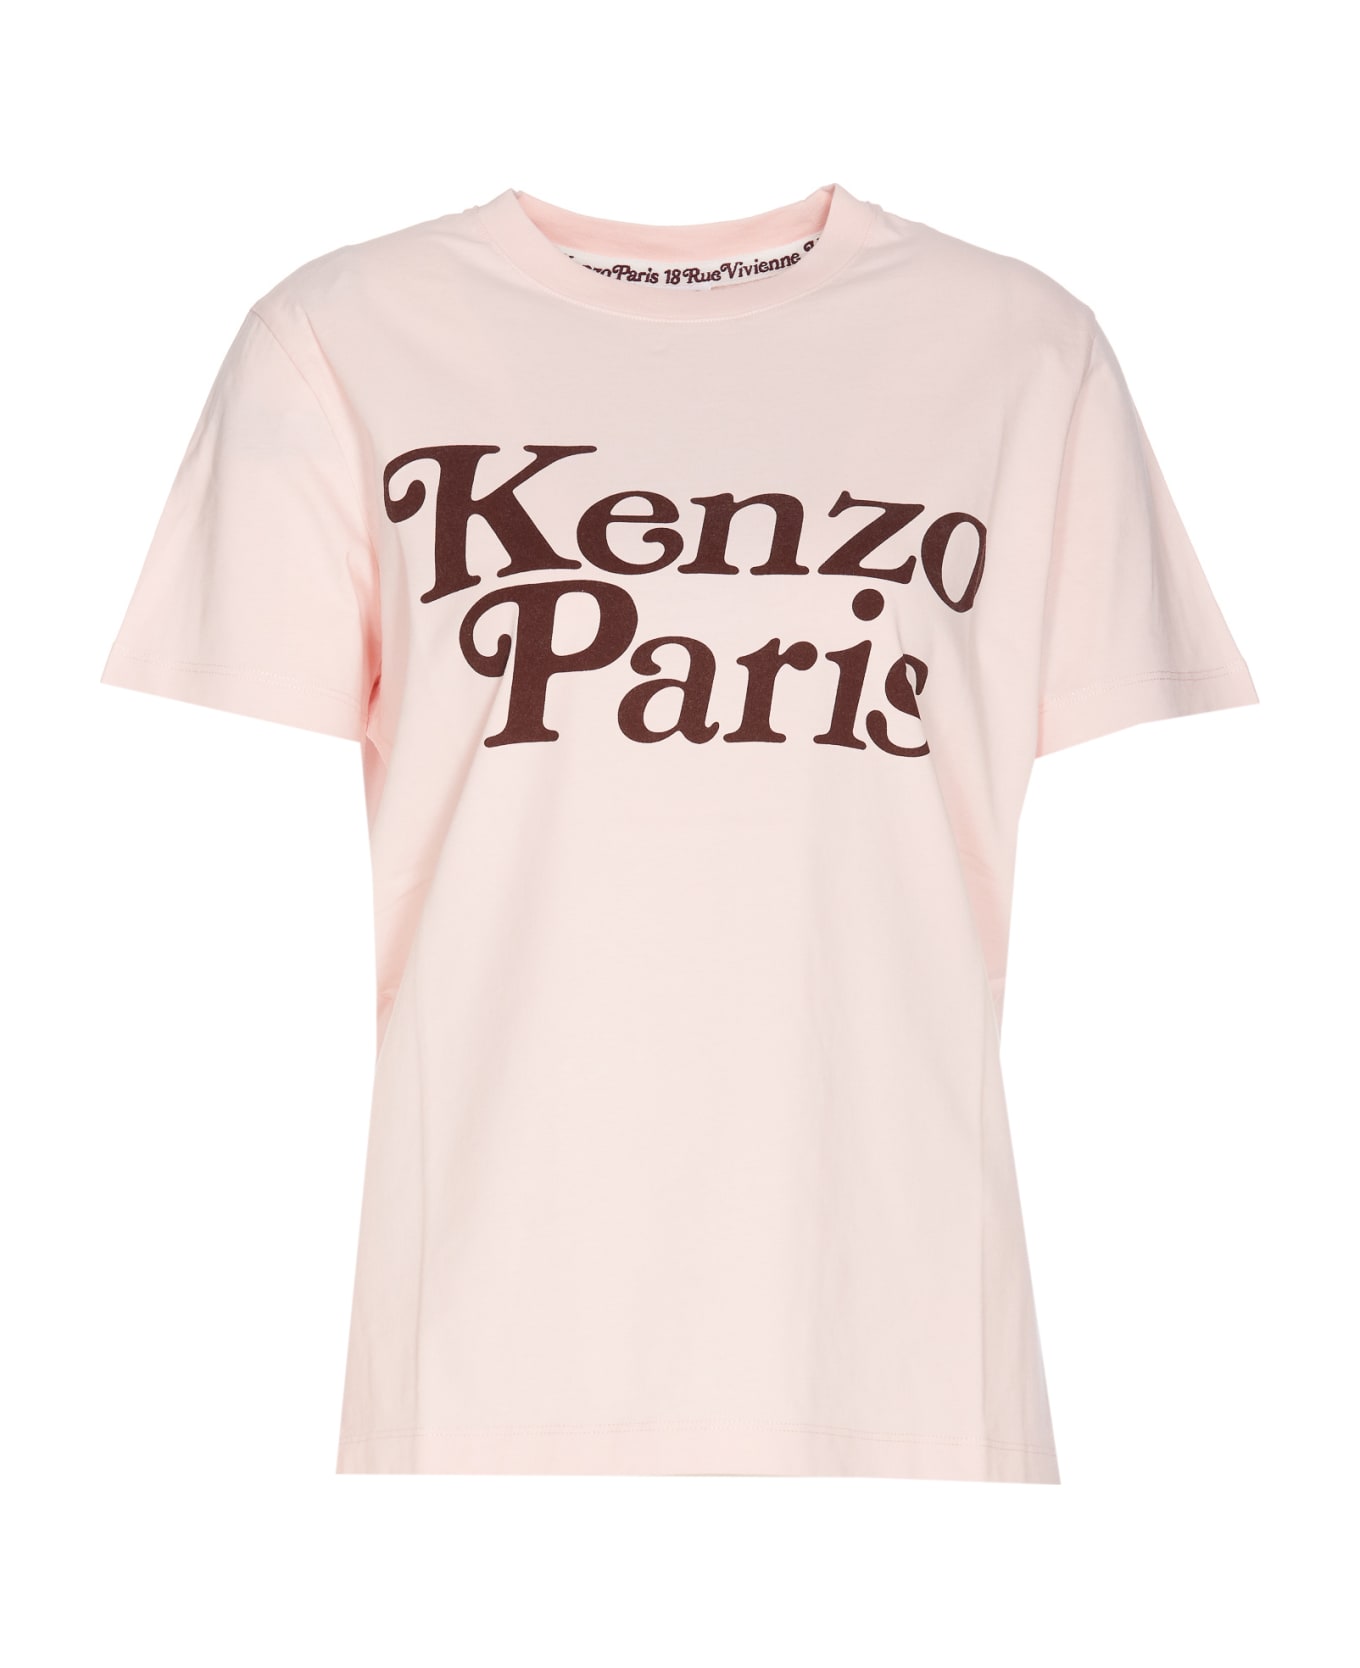 Kenzo By Verdy T-shirt Kenzo - PINK